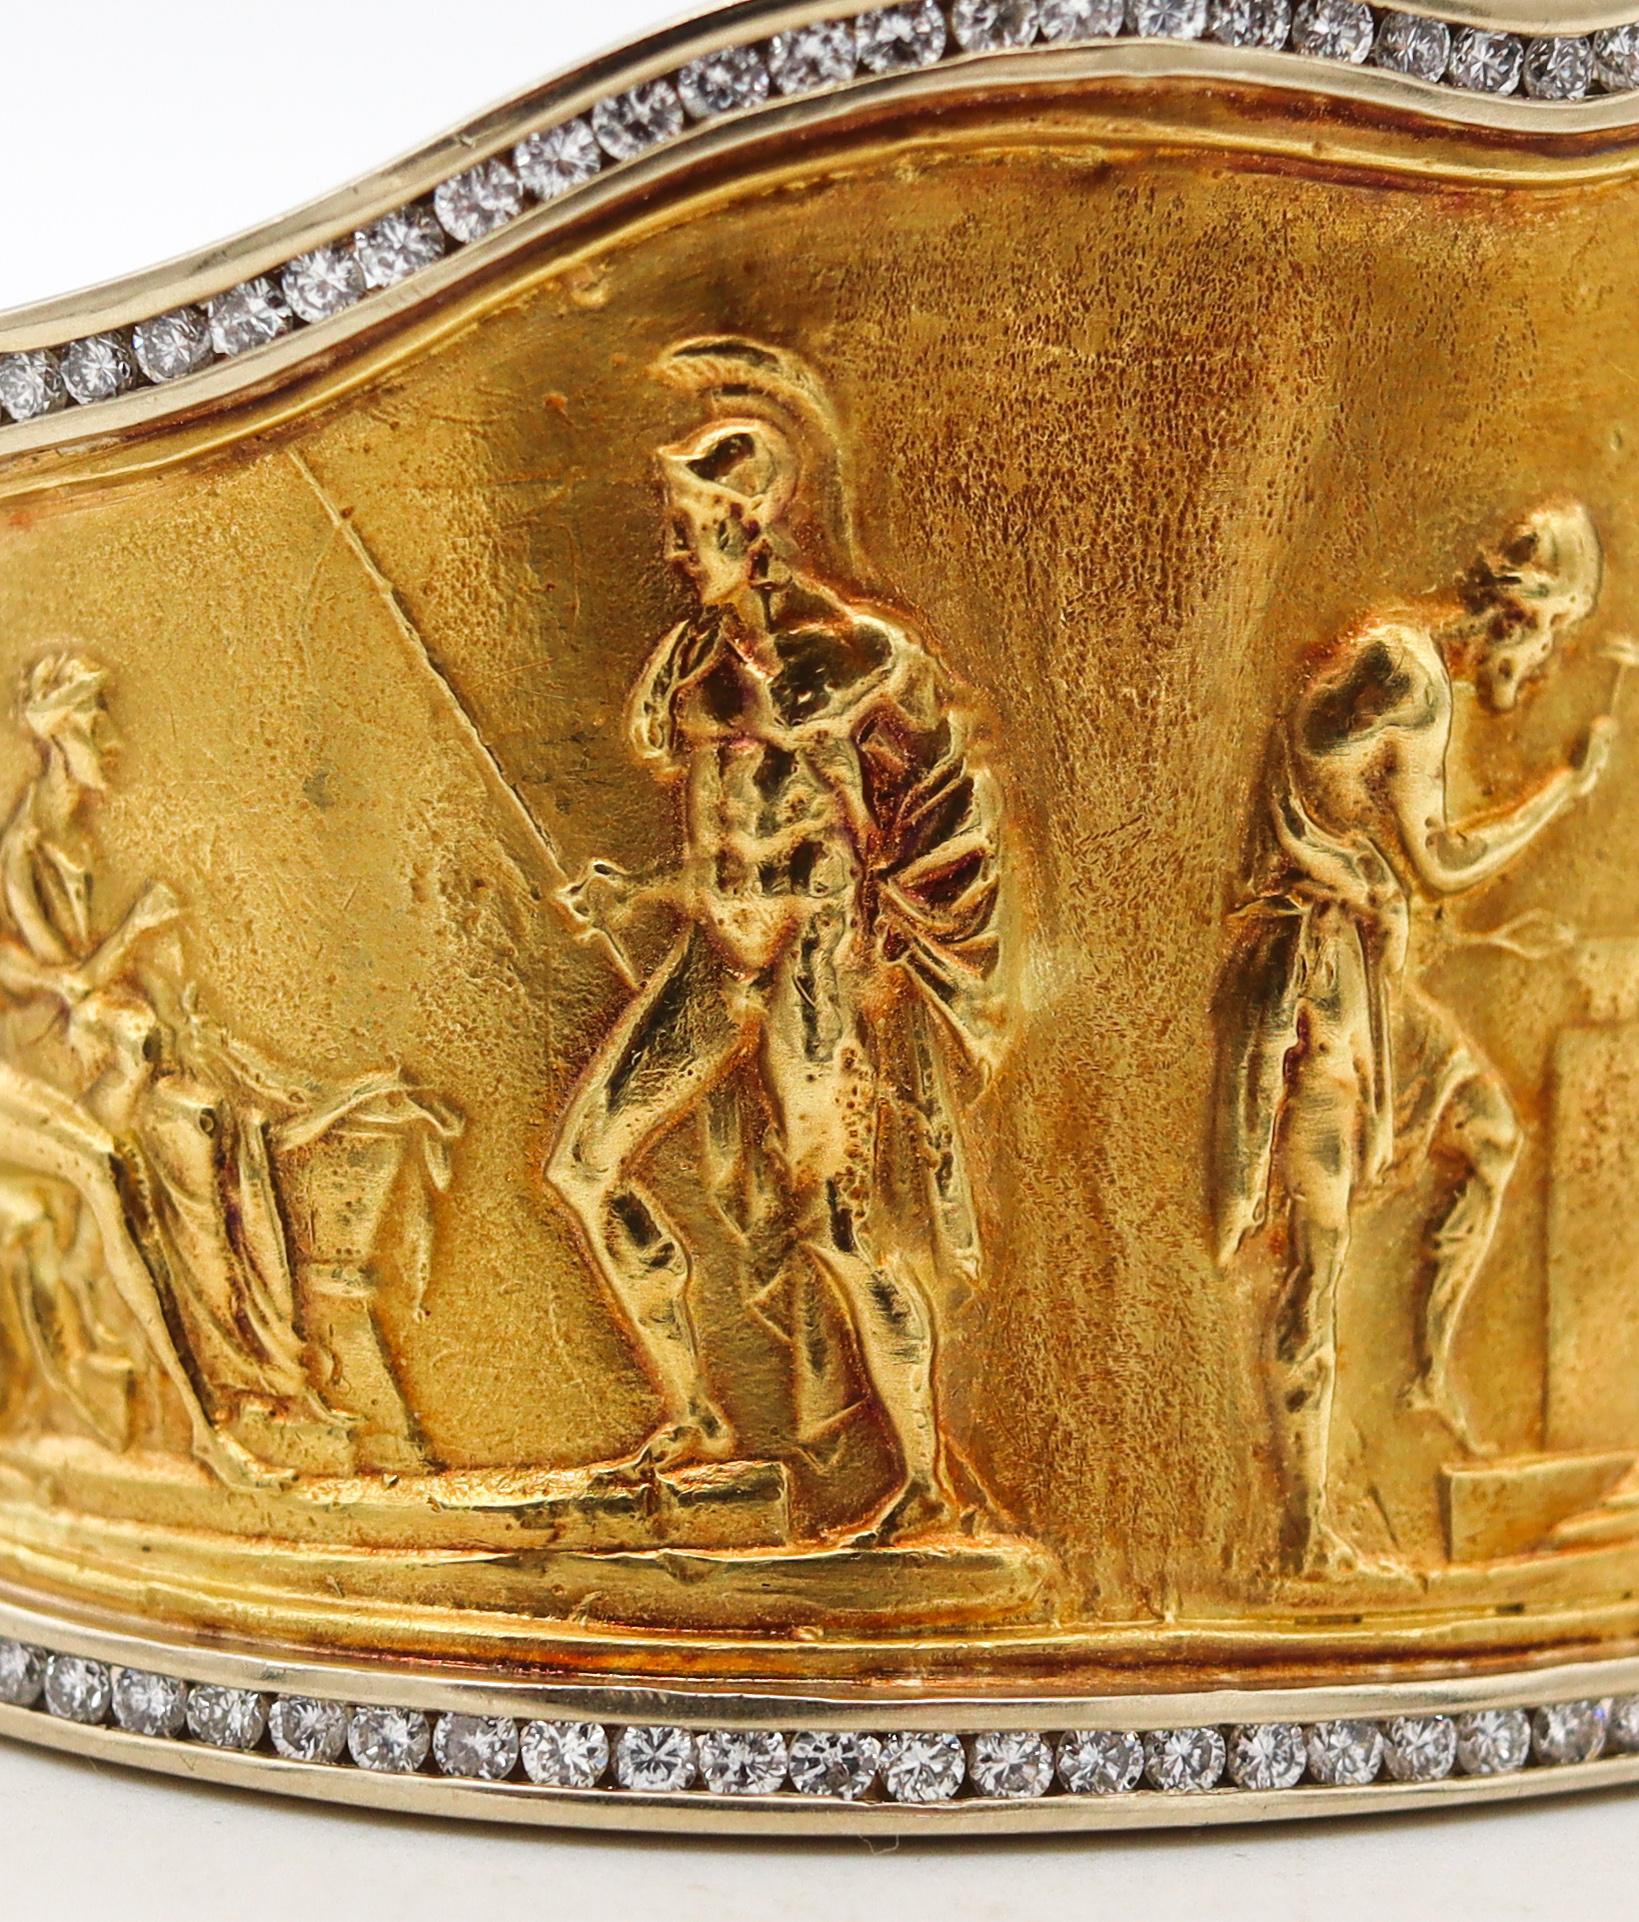 SeidenGang Rare Etruscan-Greek Revival Bracelet 18Kt Yellow Gold 5.94 Ct Diamond 3